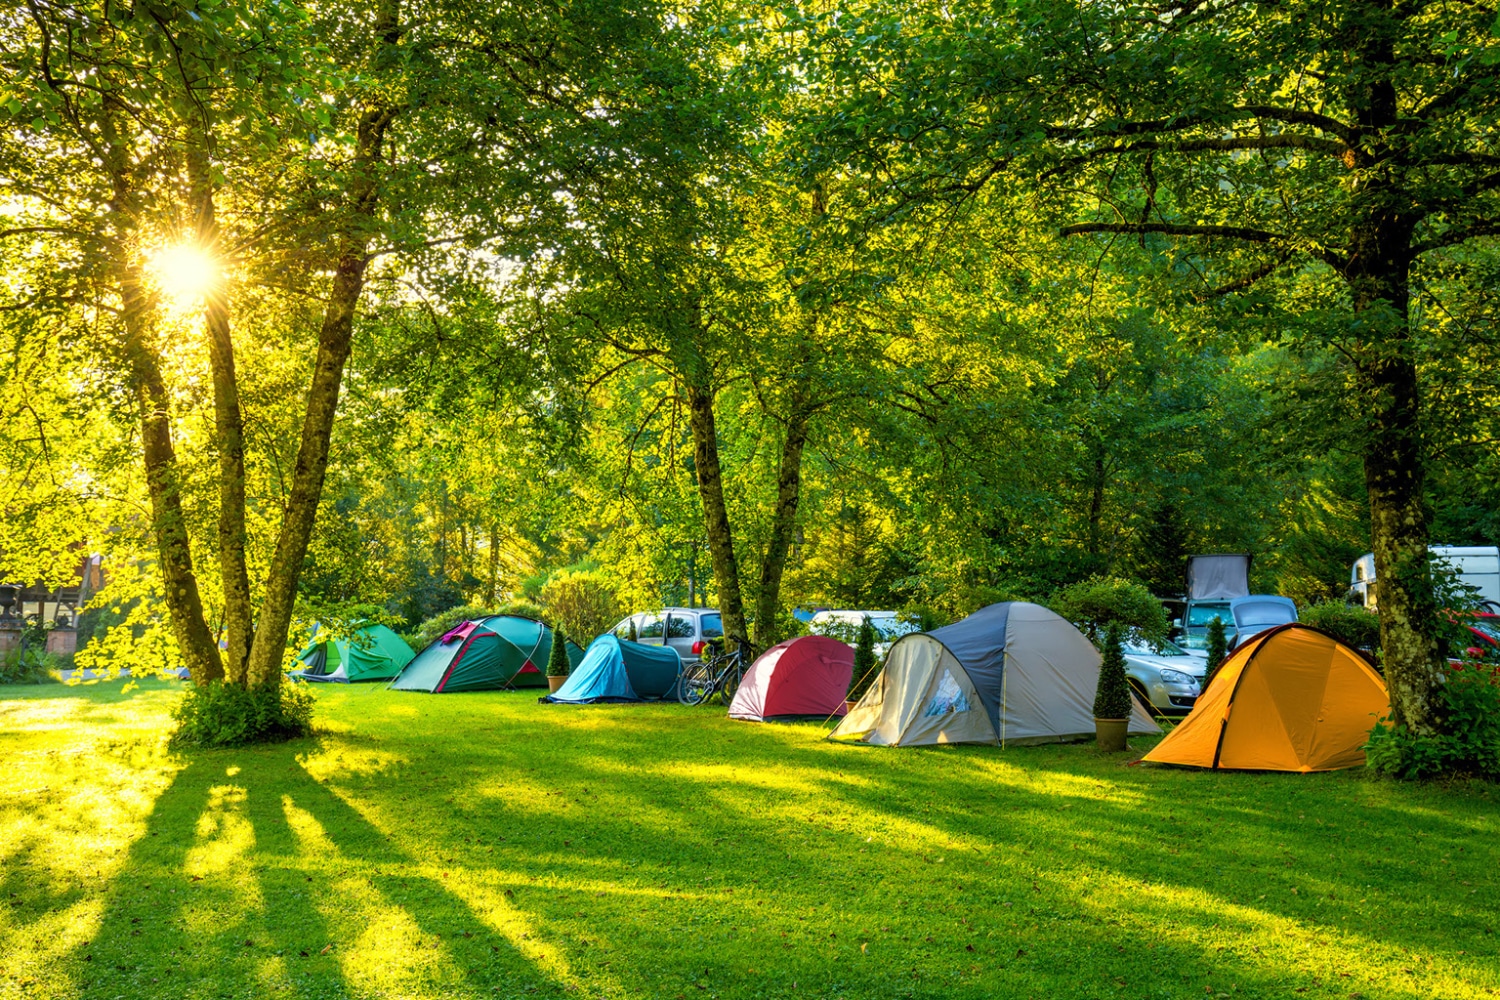 Tentes dans un camping sous les arbres